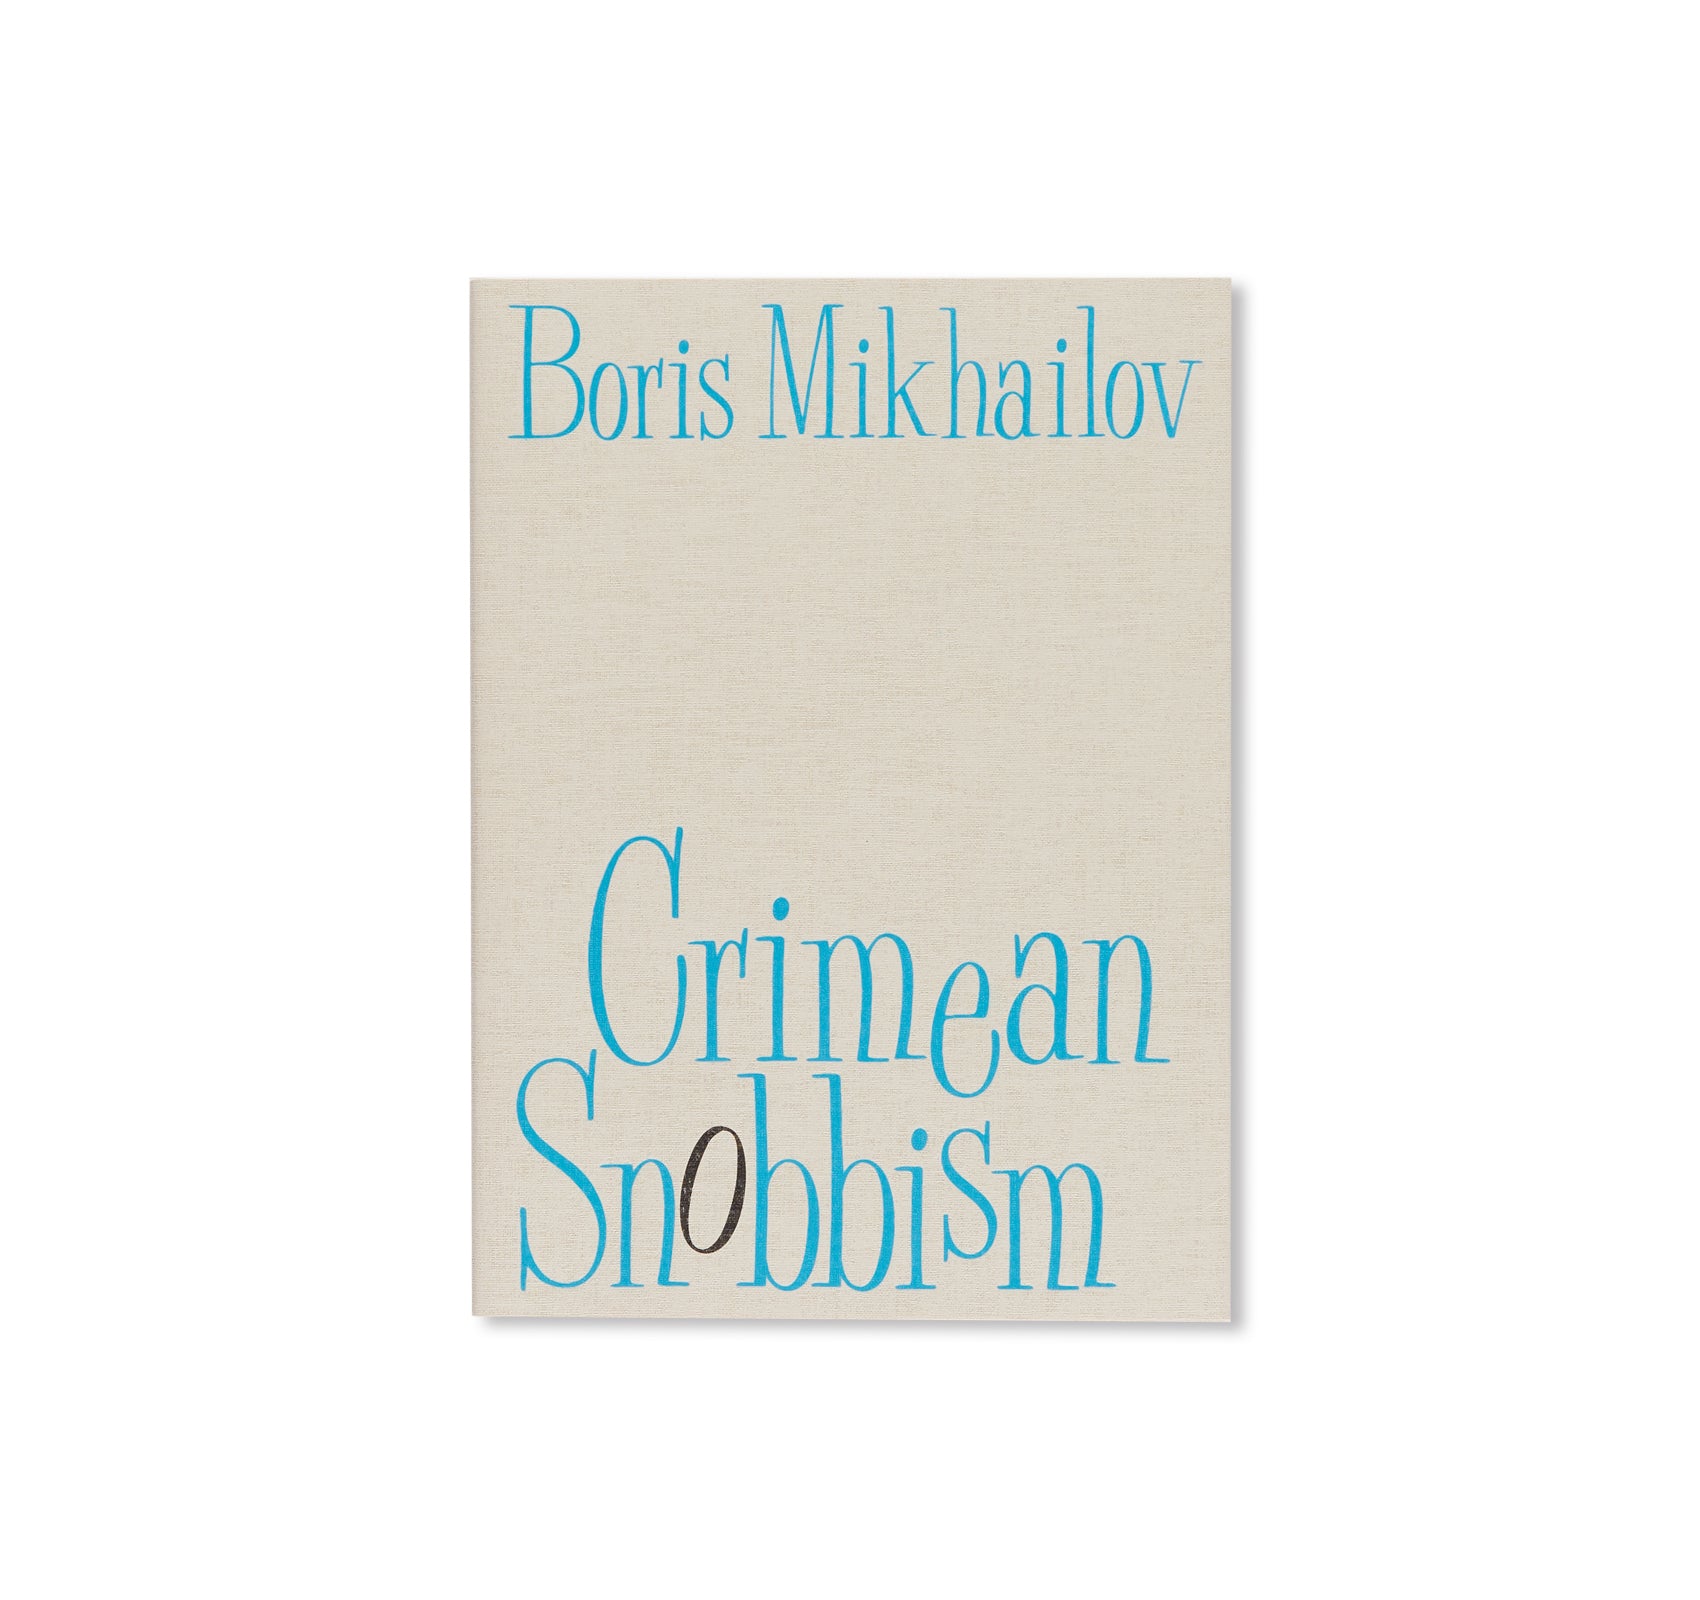 CRIMEAN SNOBBISM by Boris Mikhailov [HARDCOVER]